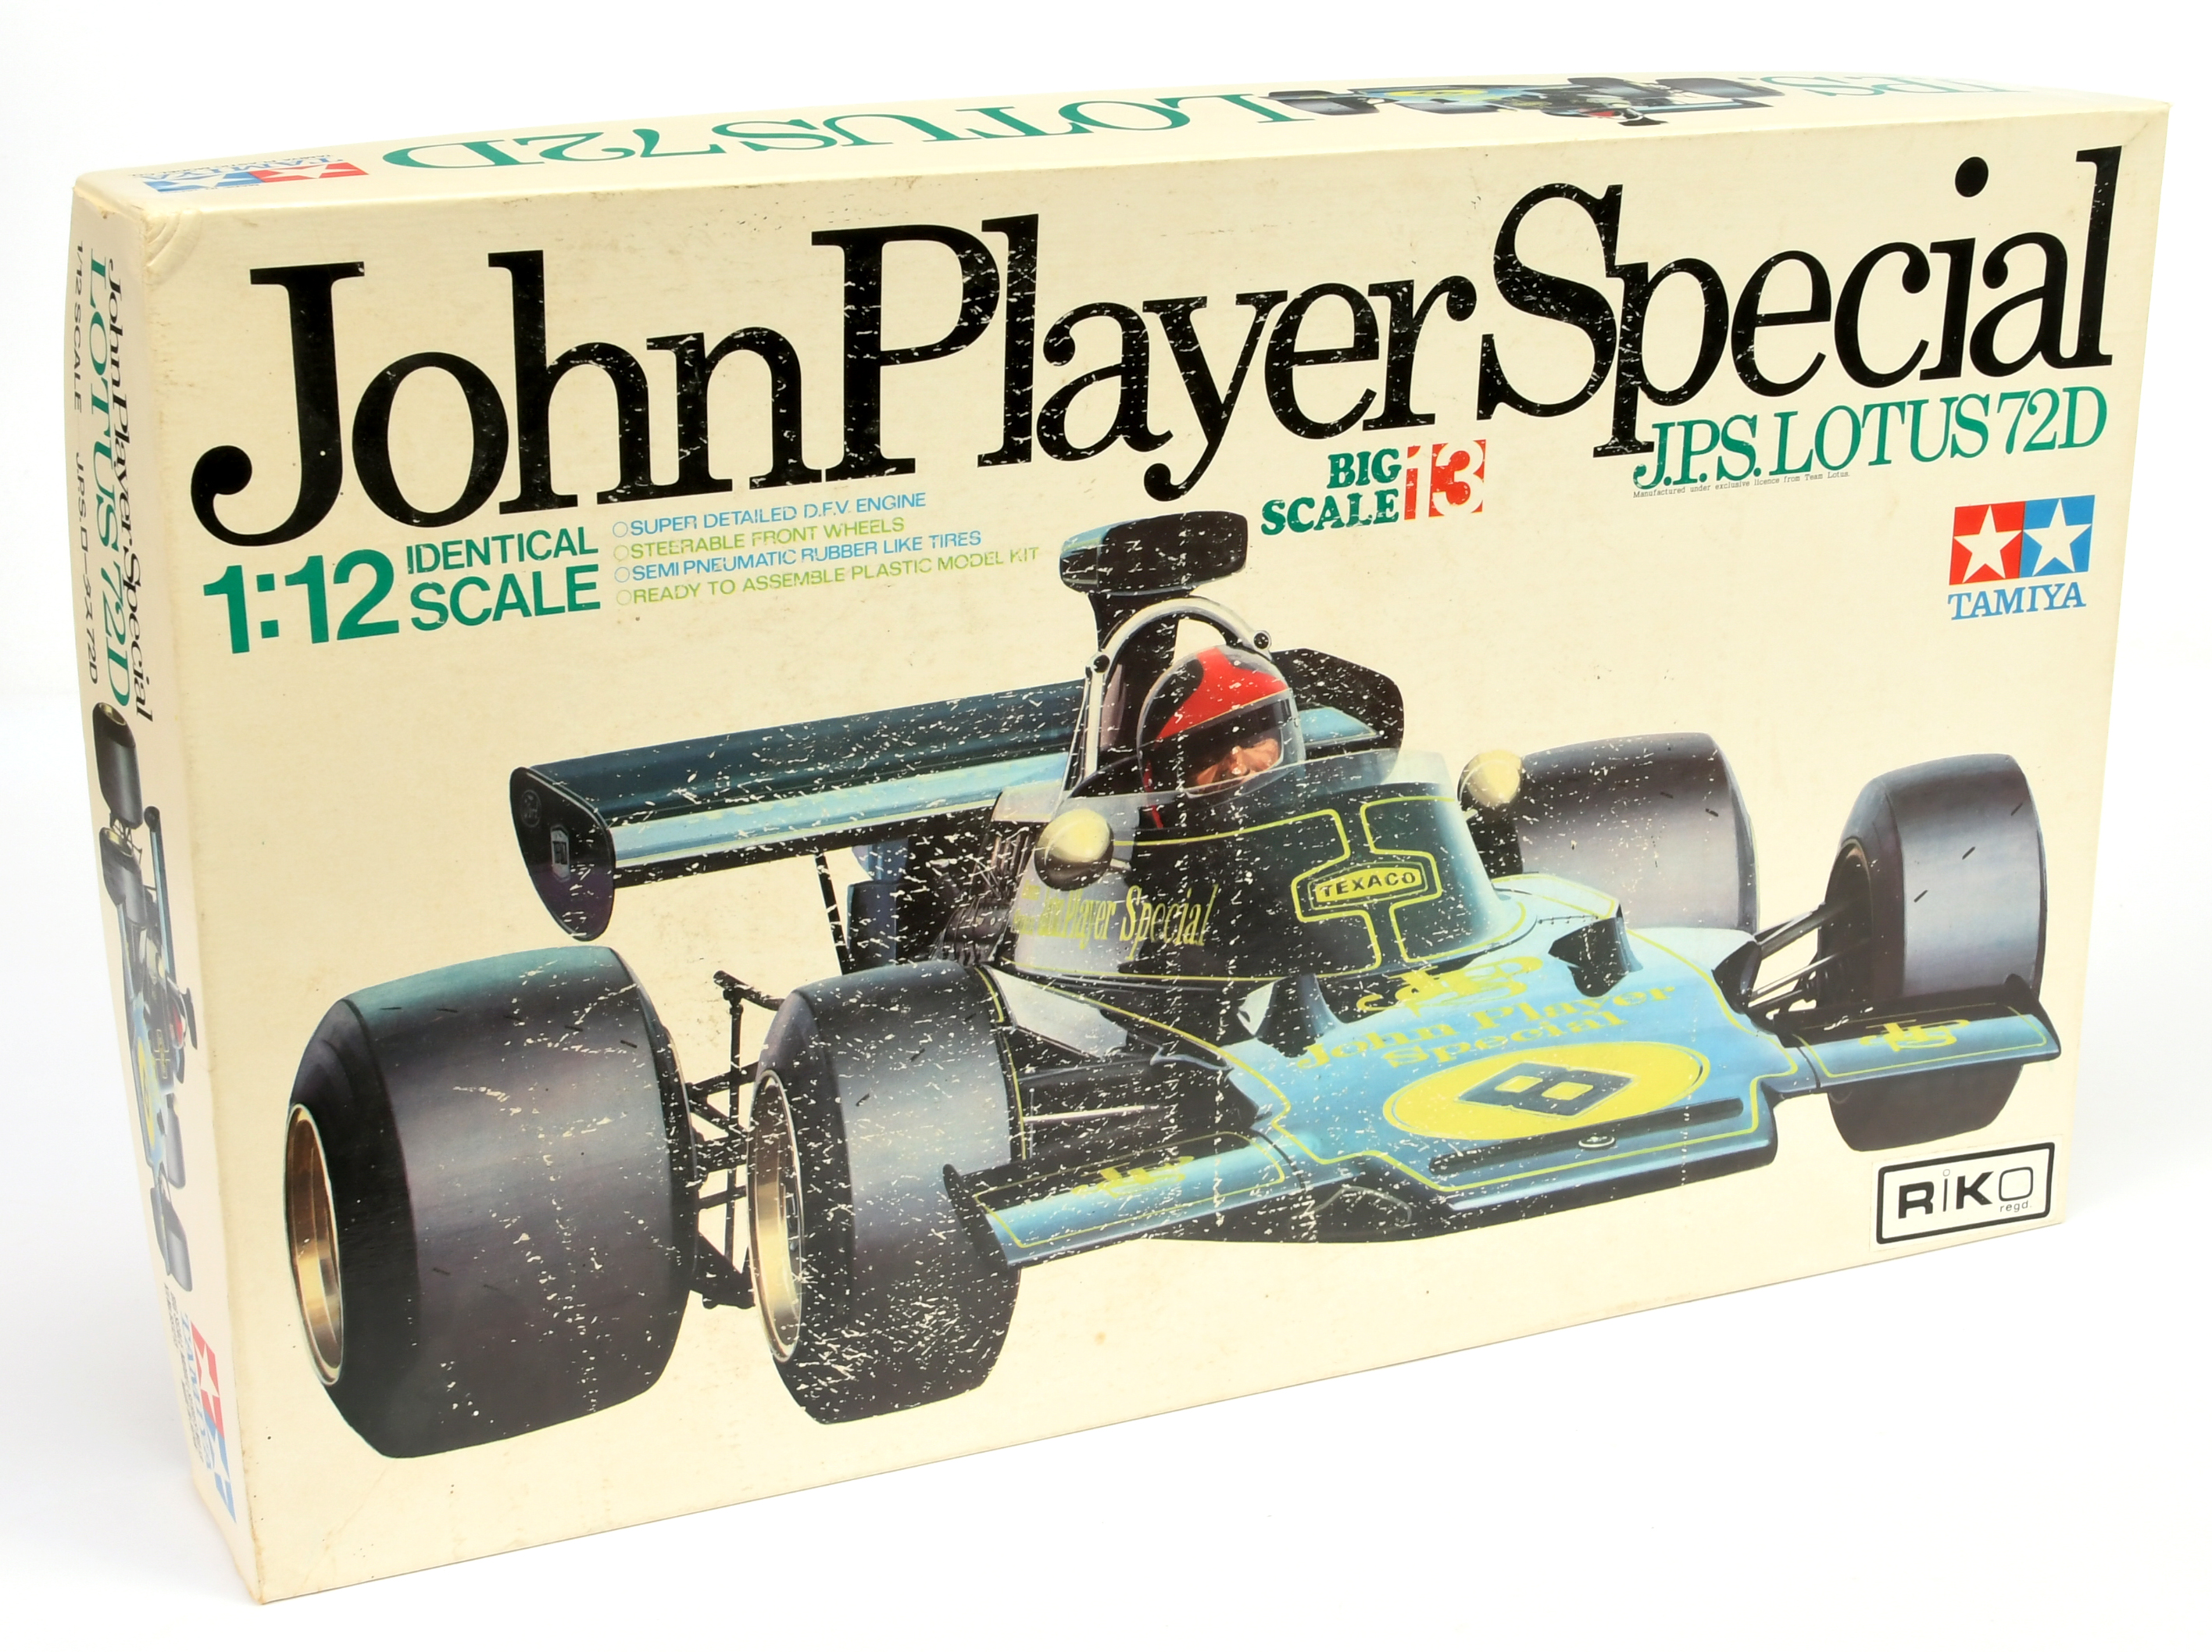 Tamiya (1/12th) Scale BS1213 Lotus 72D "John Player Special" Forumula 1 Racing Car Plastic Kit - ...